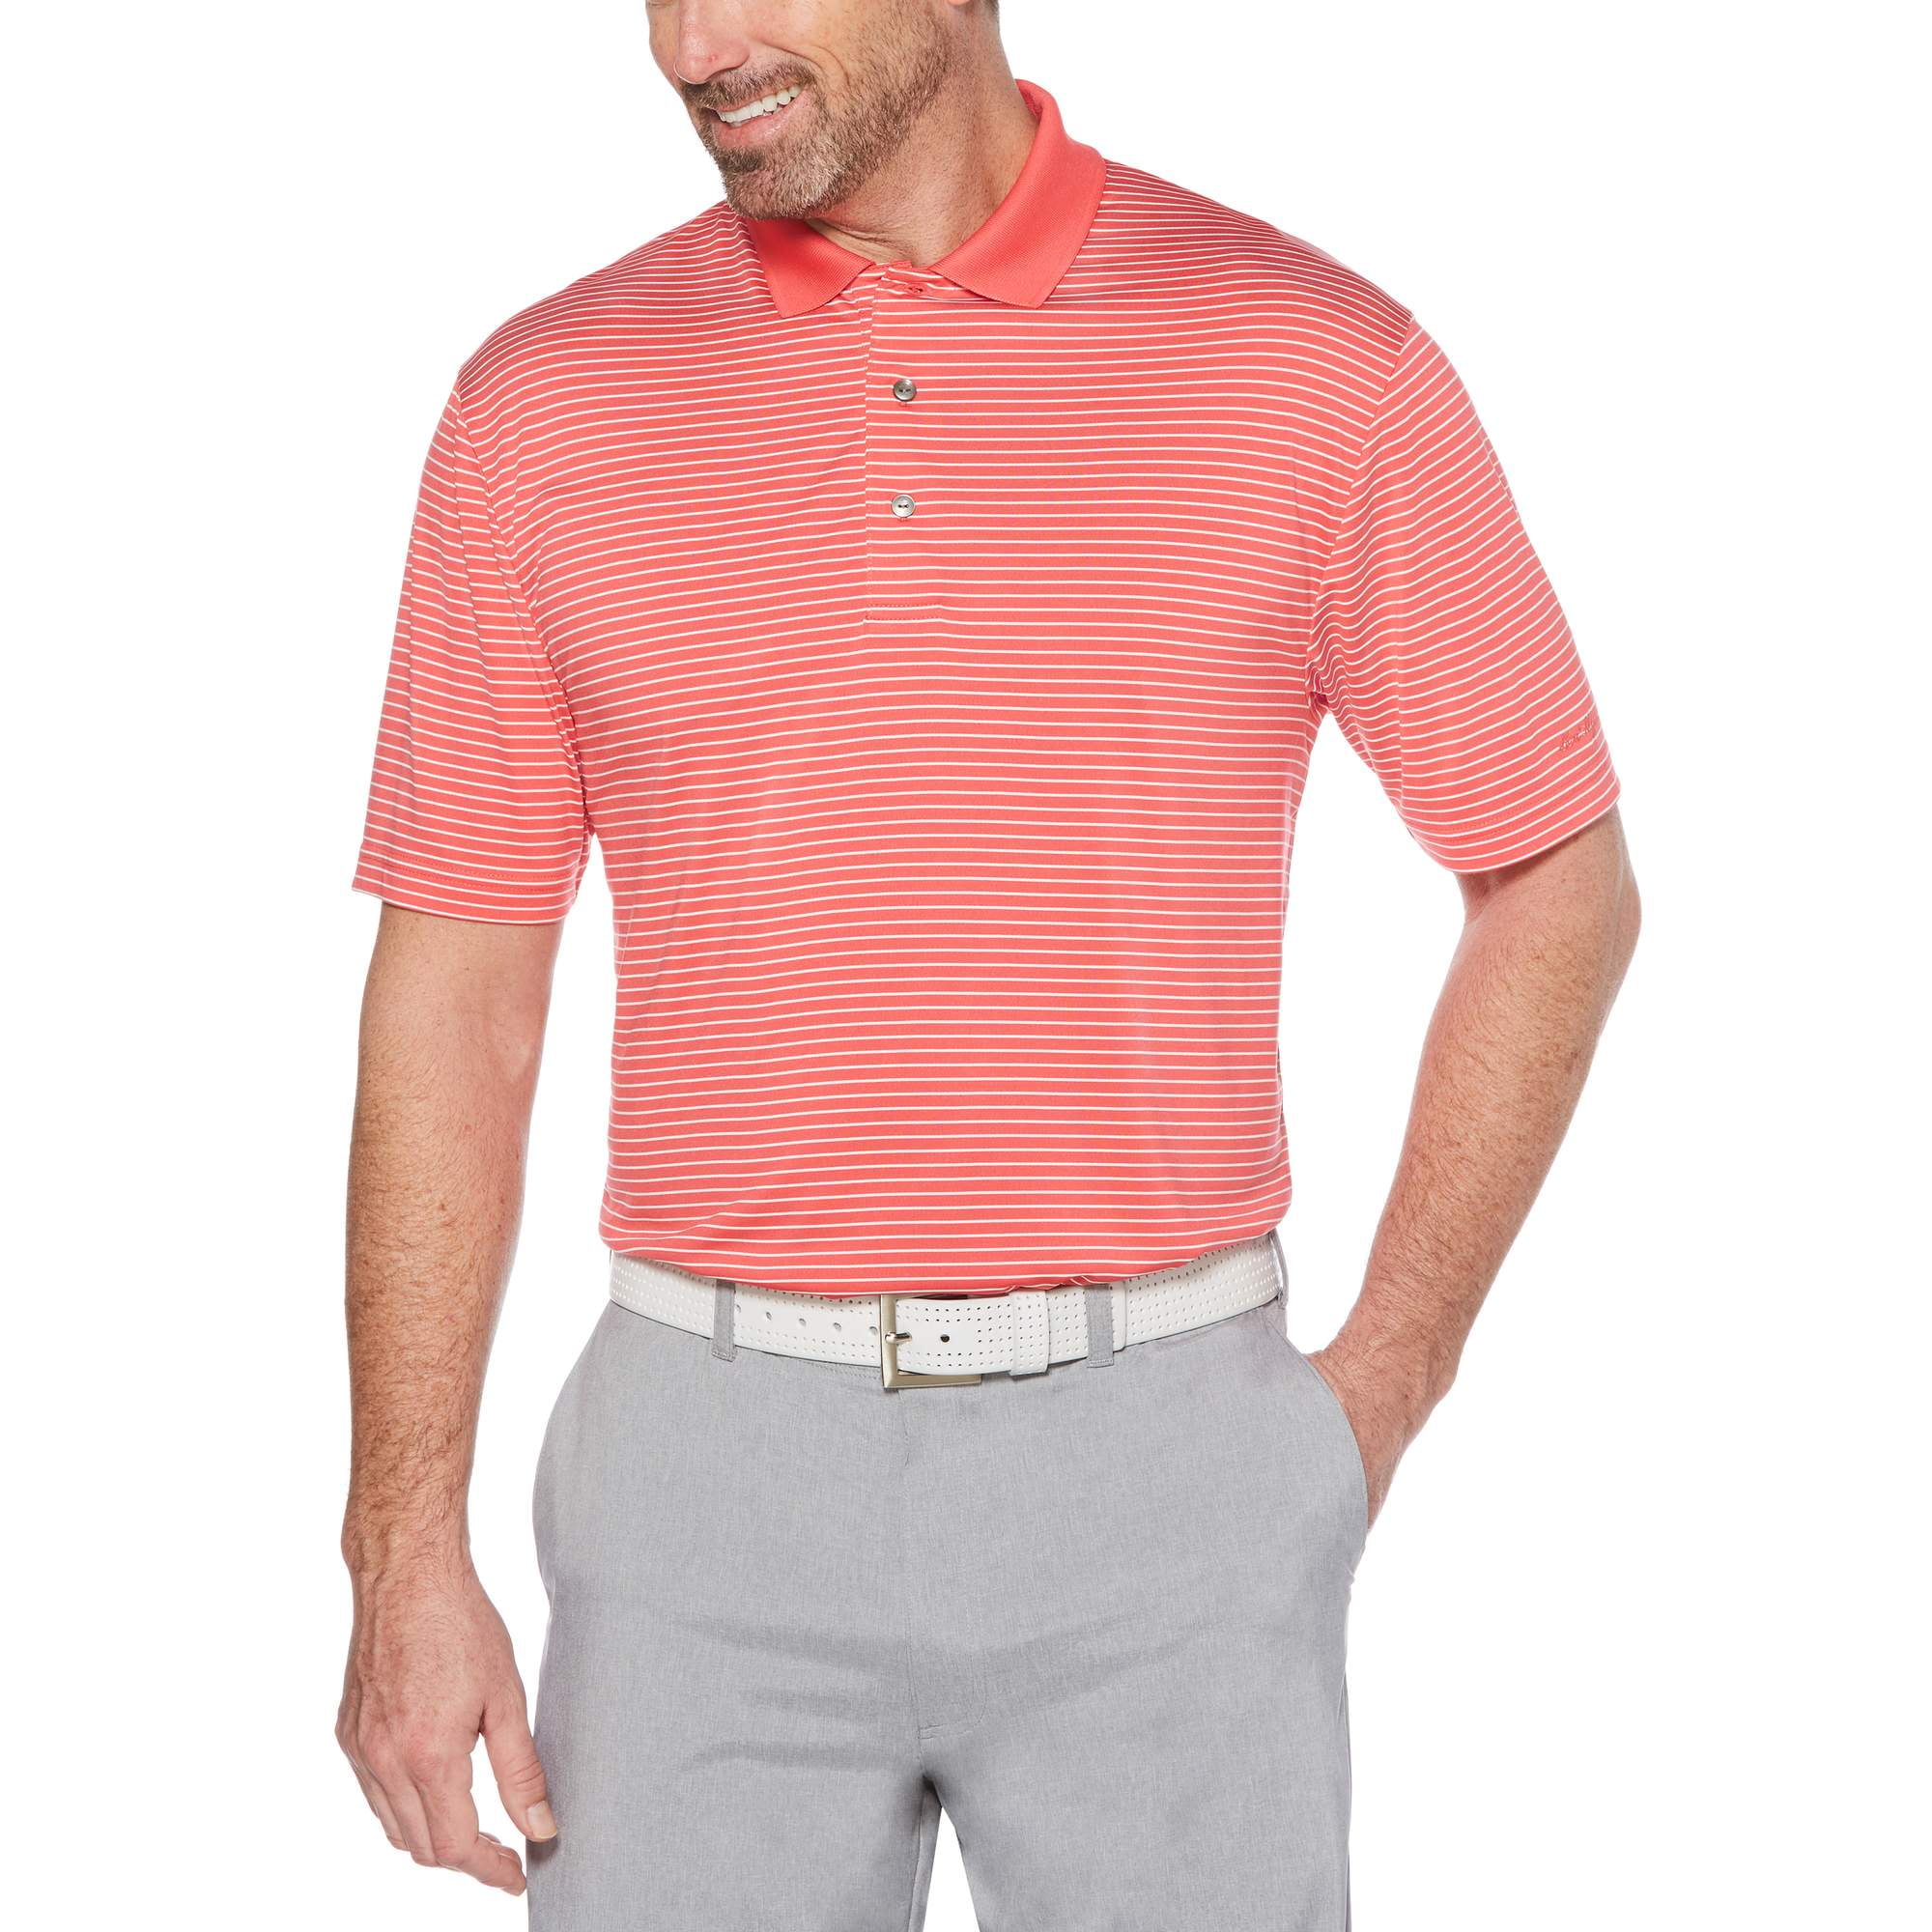 Ben Hogan Men's performance short sleeve striped polo shirt, up to 5xl ...